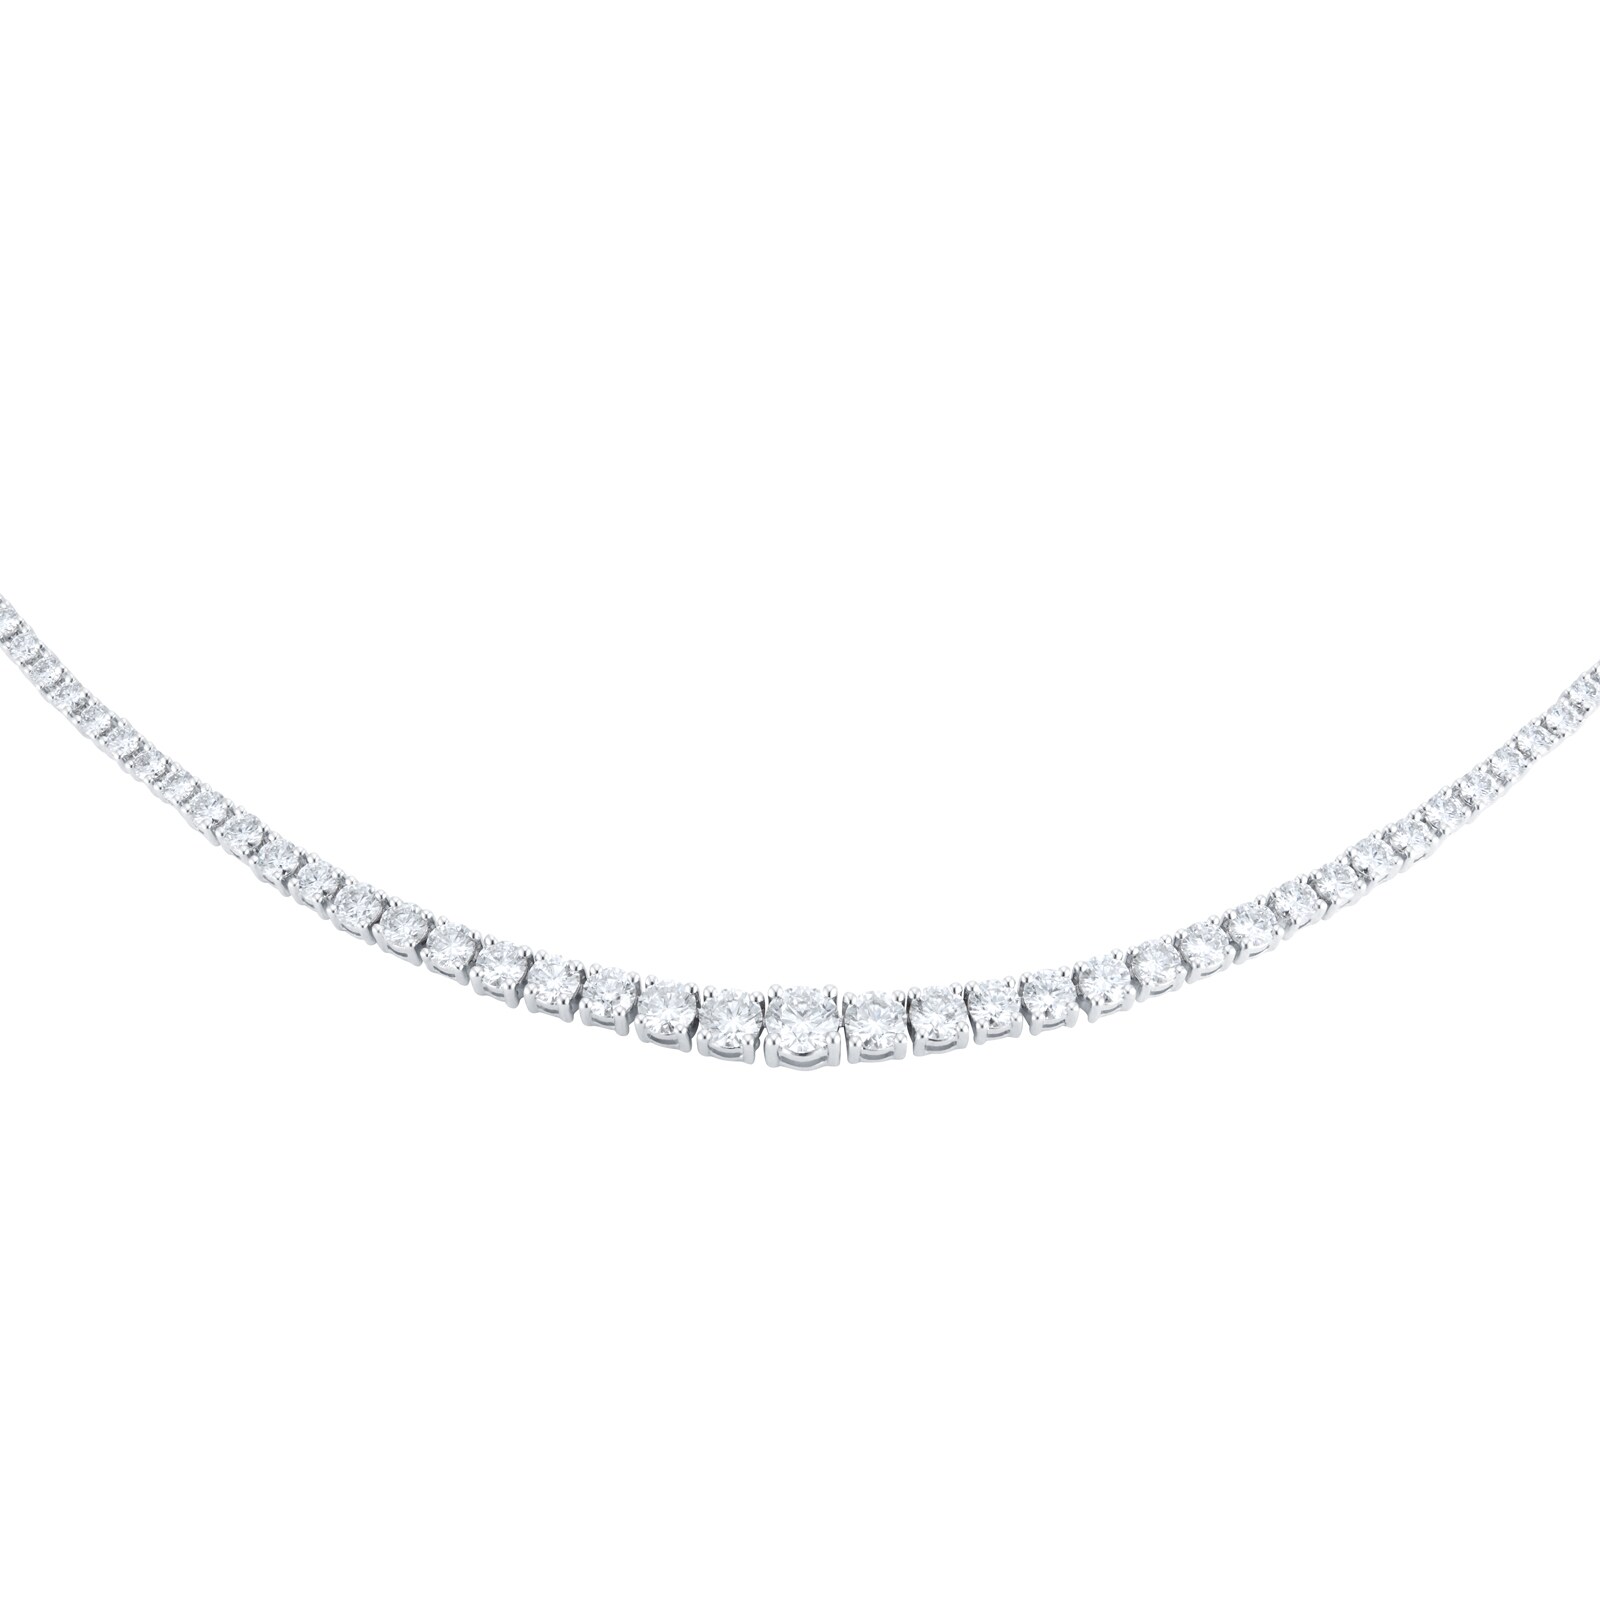 18ct White Gold 5.55cttw Diamond Line Necklace